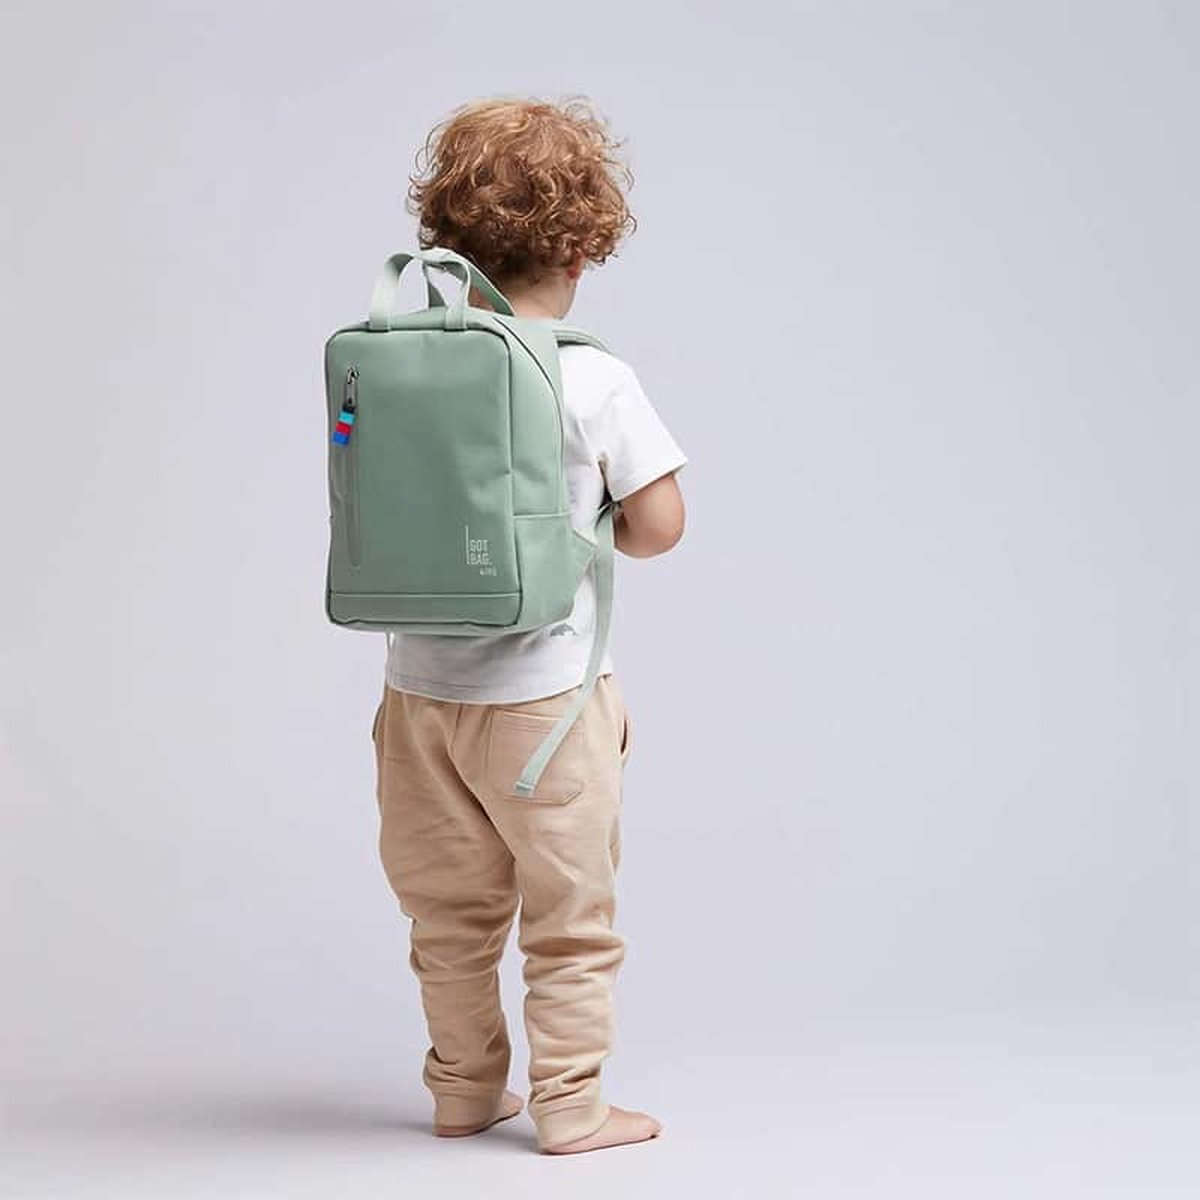 GOT BAG Rugzak / Rugtas / Schooltas - Daypack Mini - 5 Liter - Groen